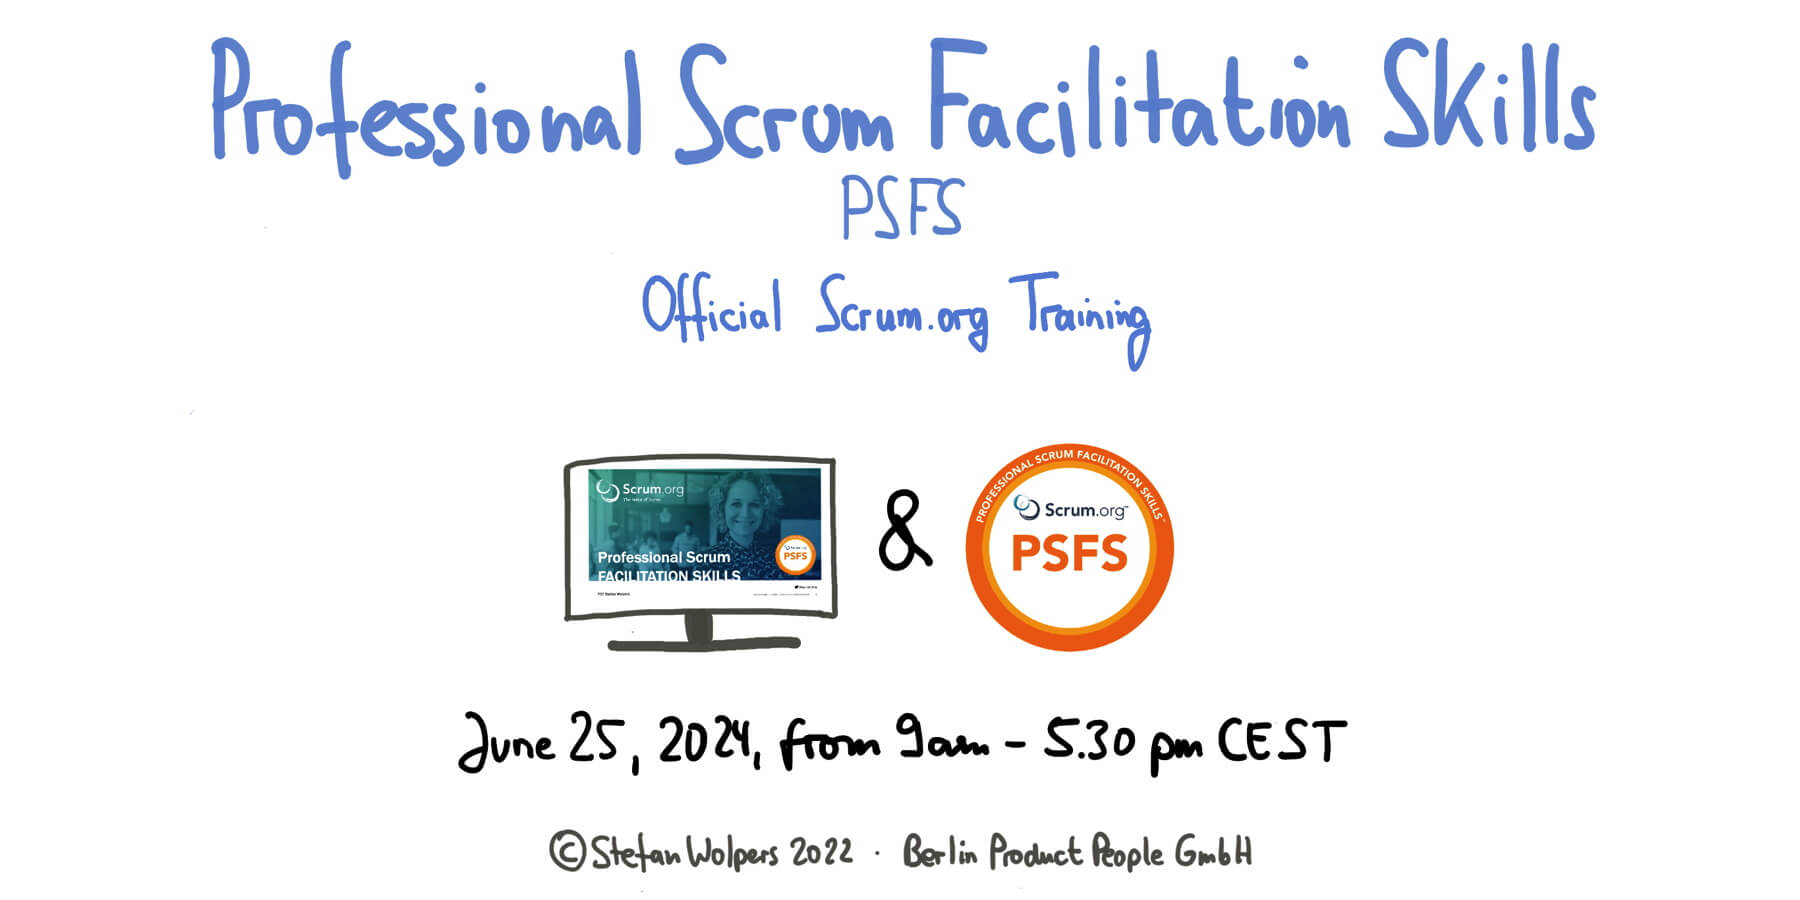 Professional Scrum Facilitation Skills Class (PFSF), June 25, 2024 — Berlin-Product-People.com